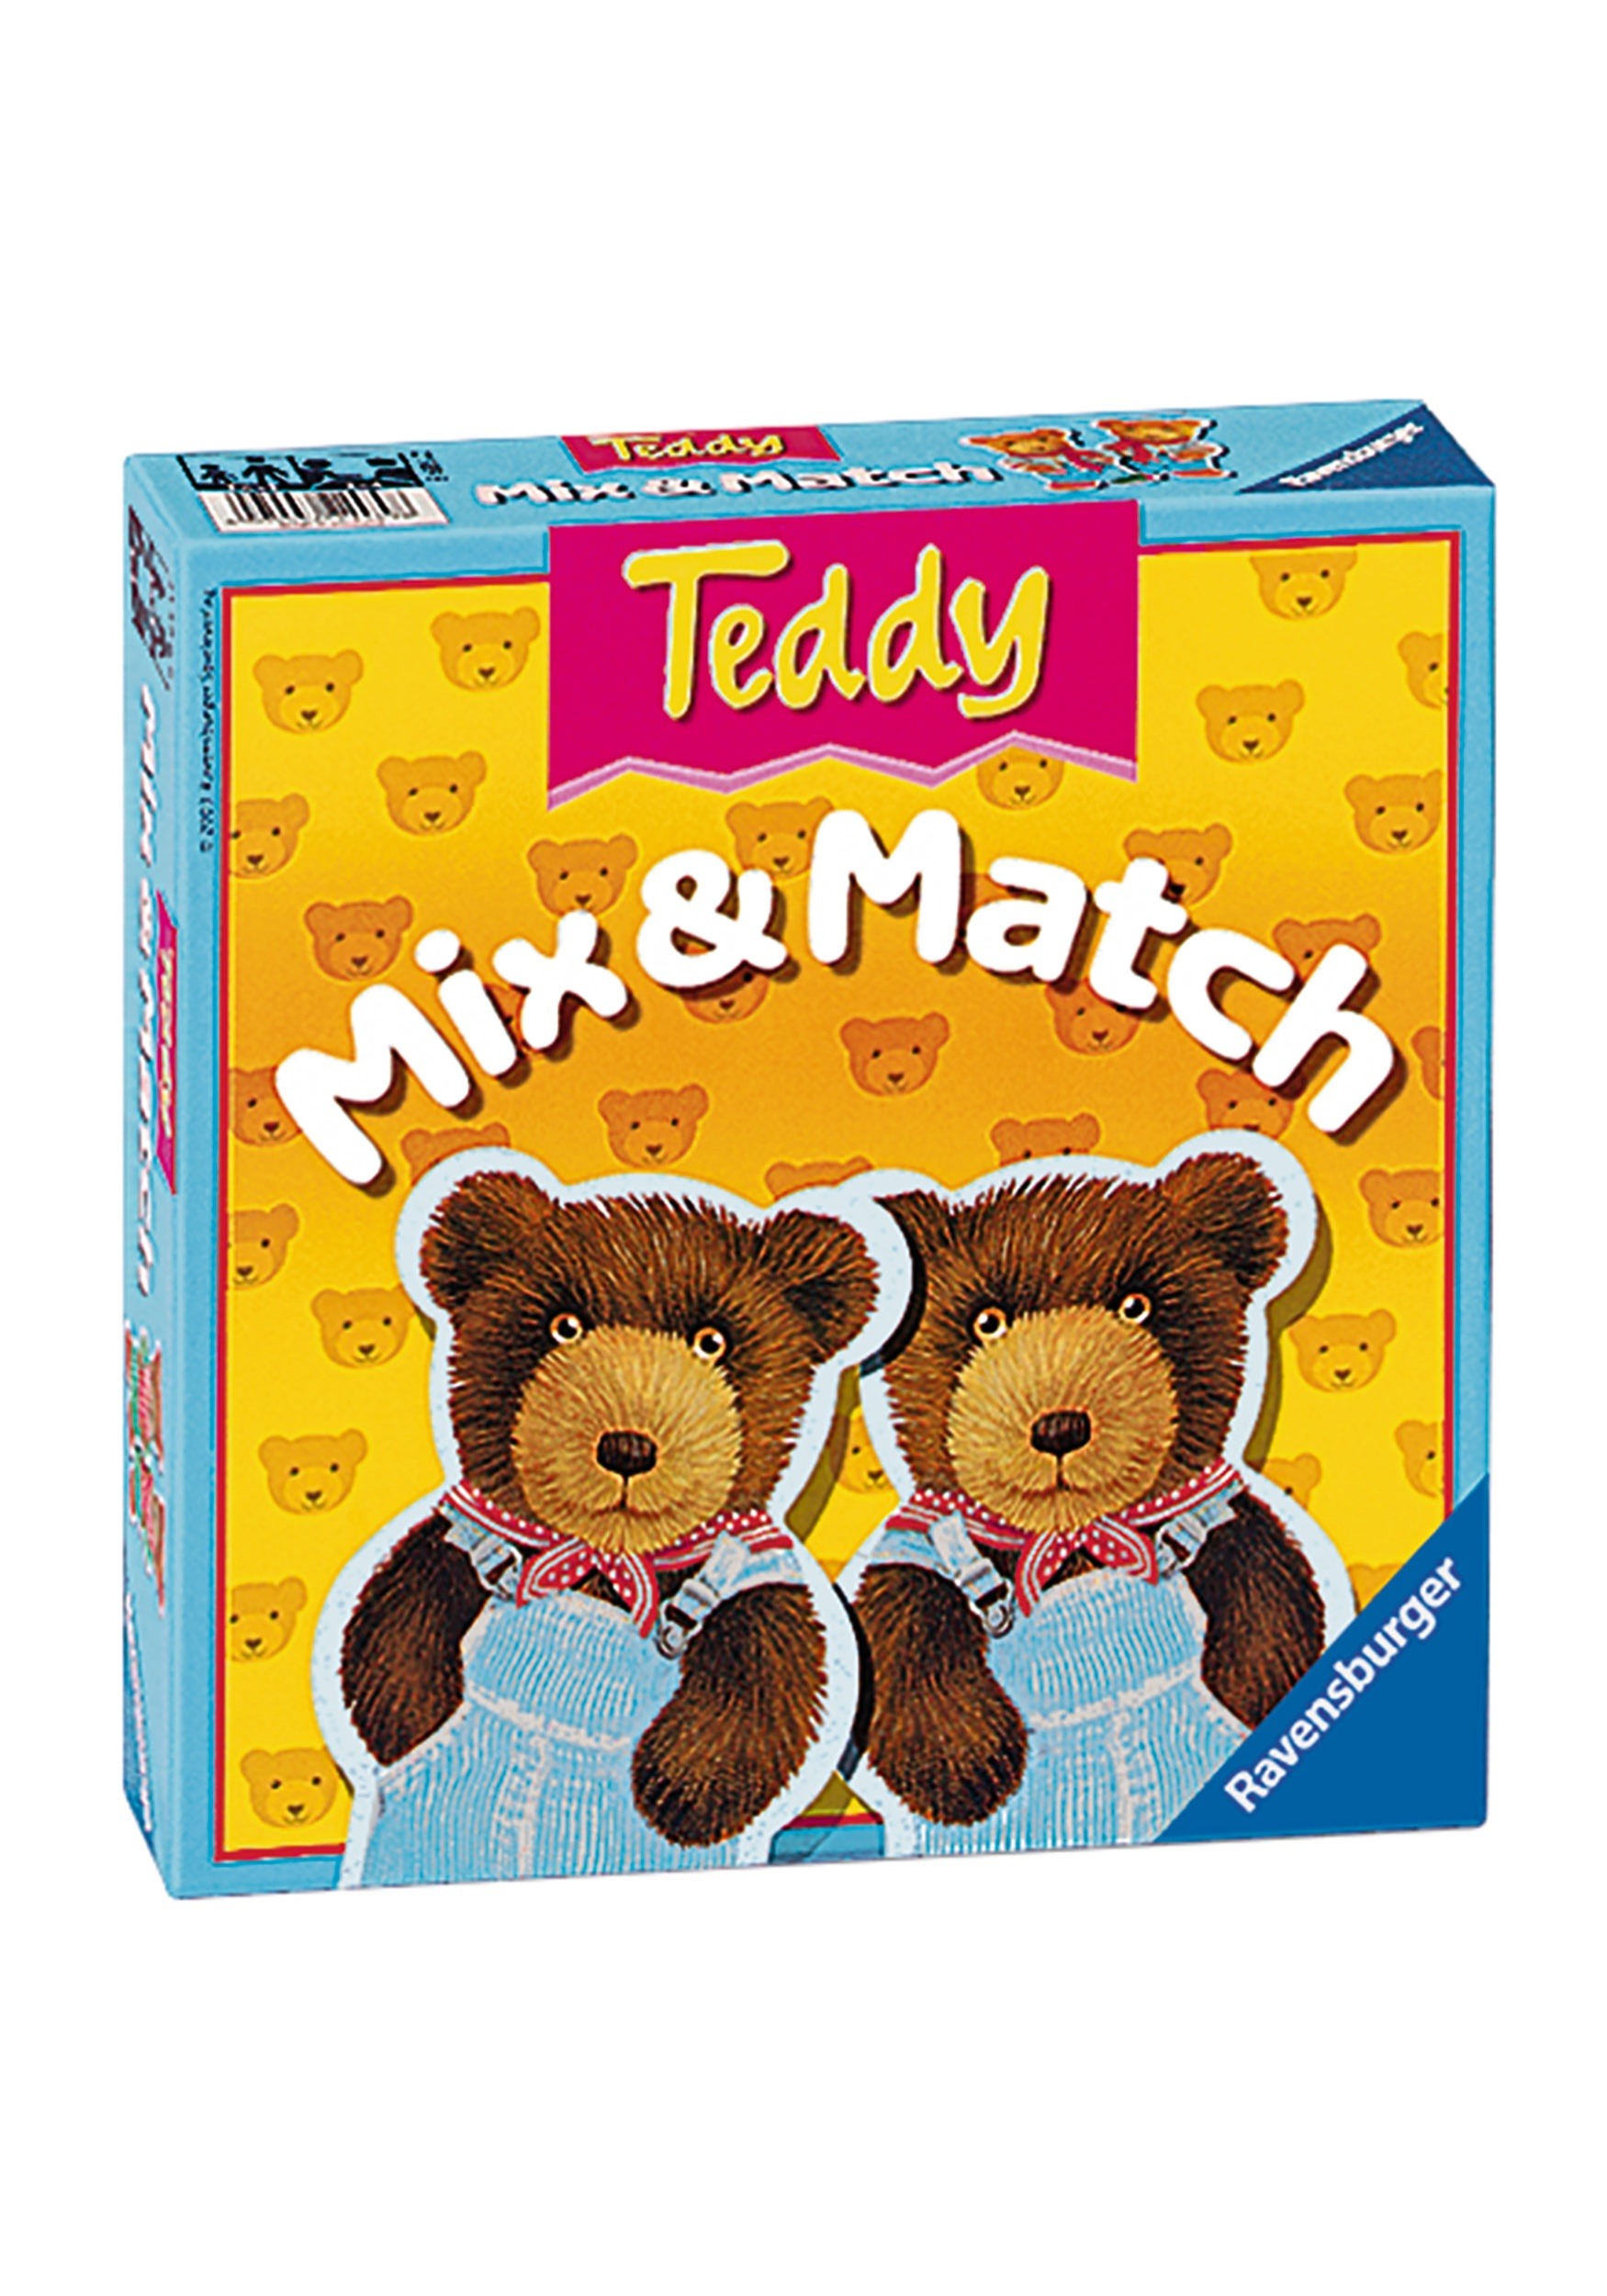 ravensburger teddy mix match children s game Ravensburger teddy match mix customer